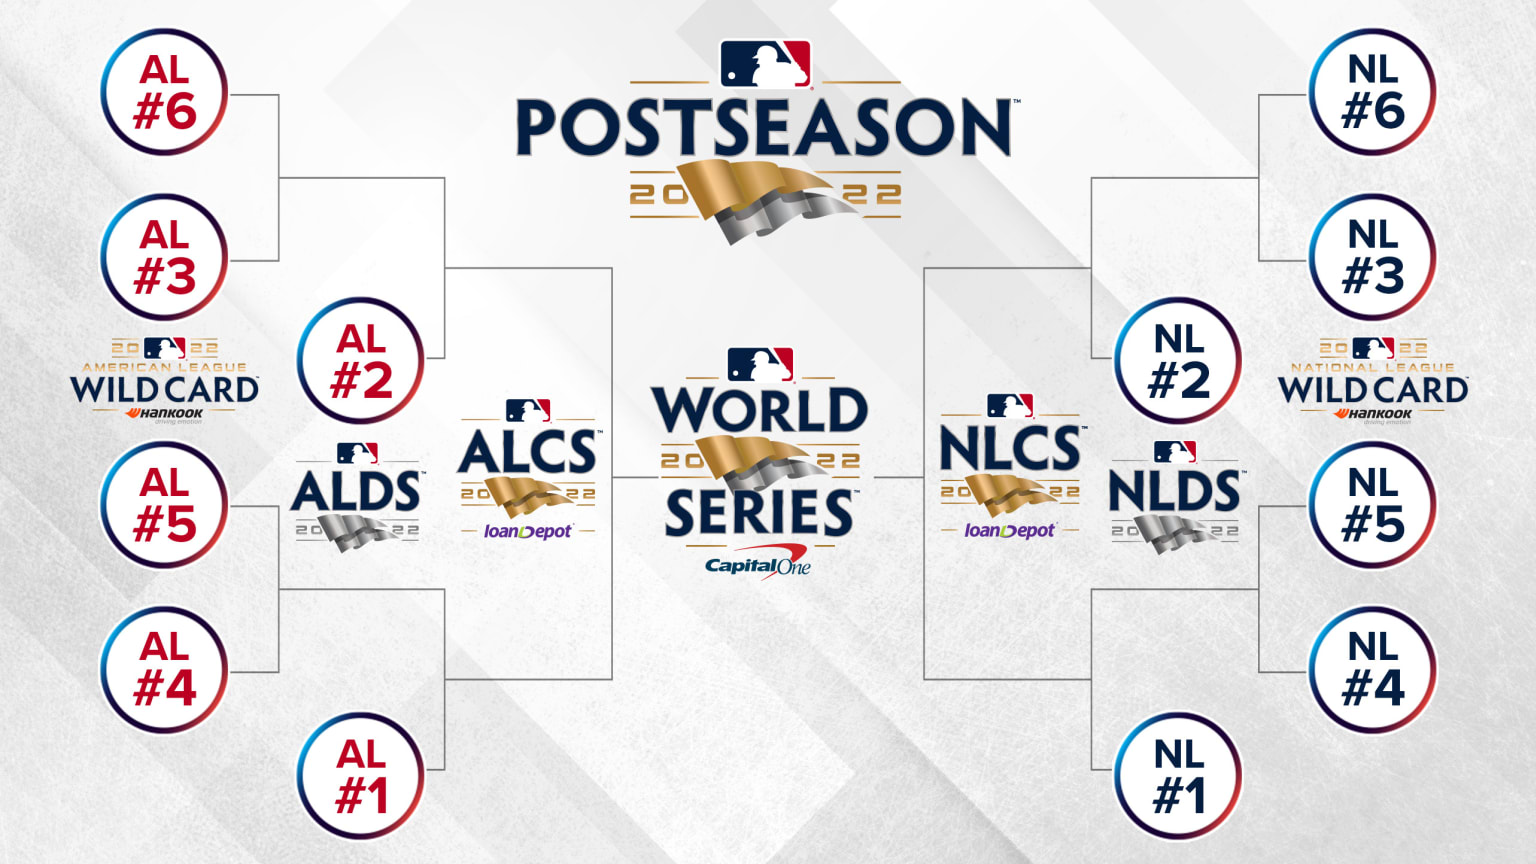 MLB postseason schedule reveal 08/16/2022 MLB